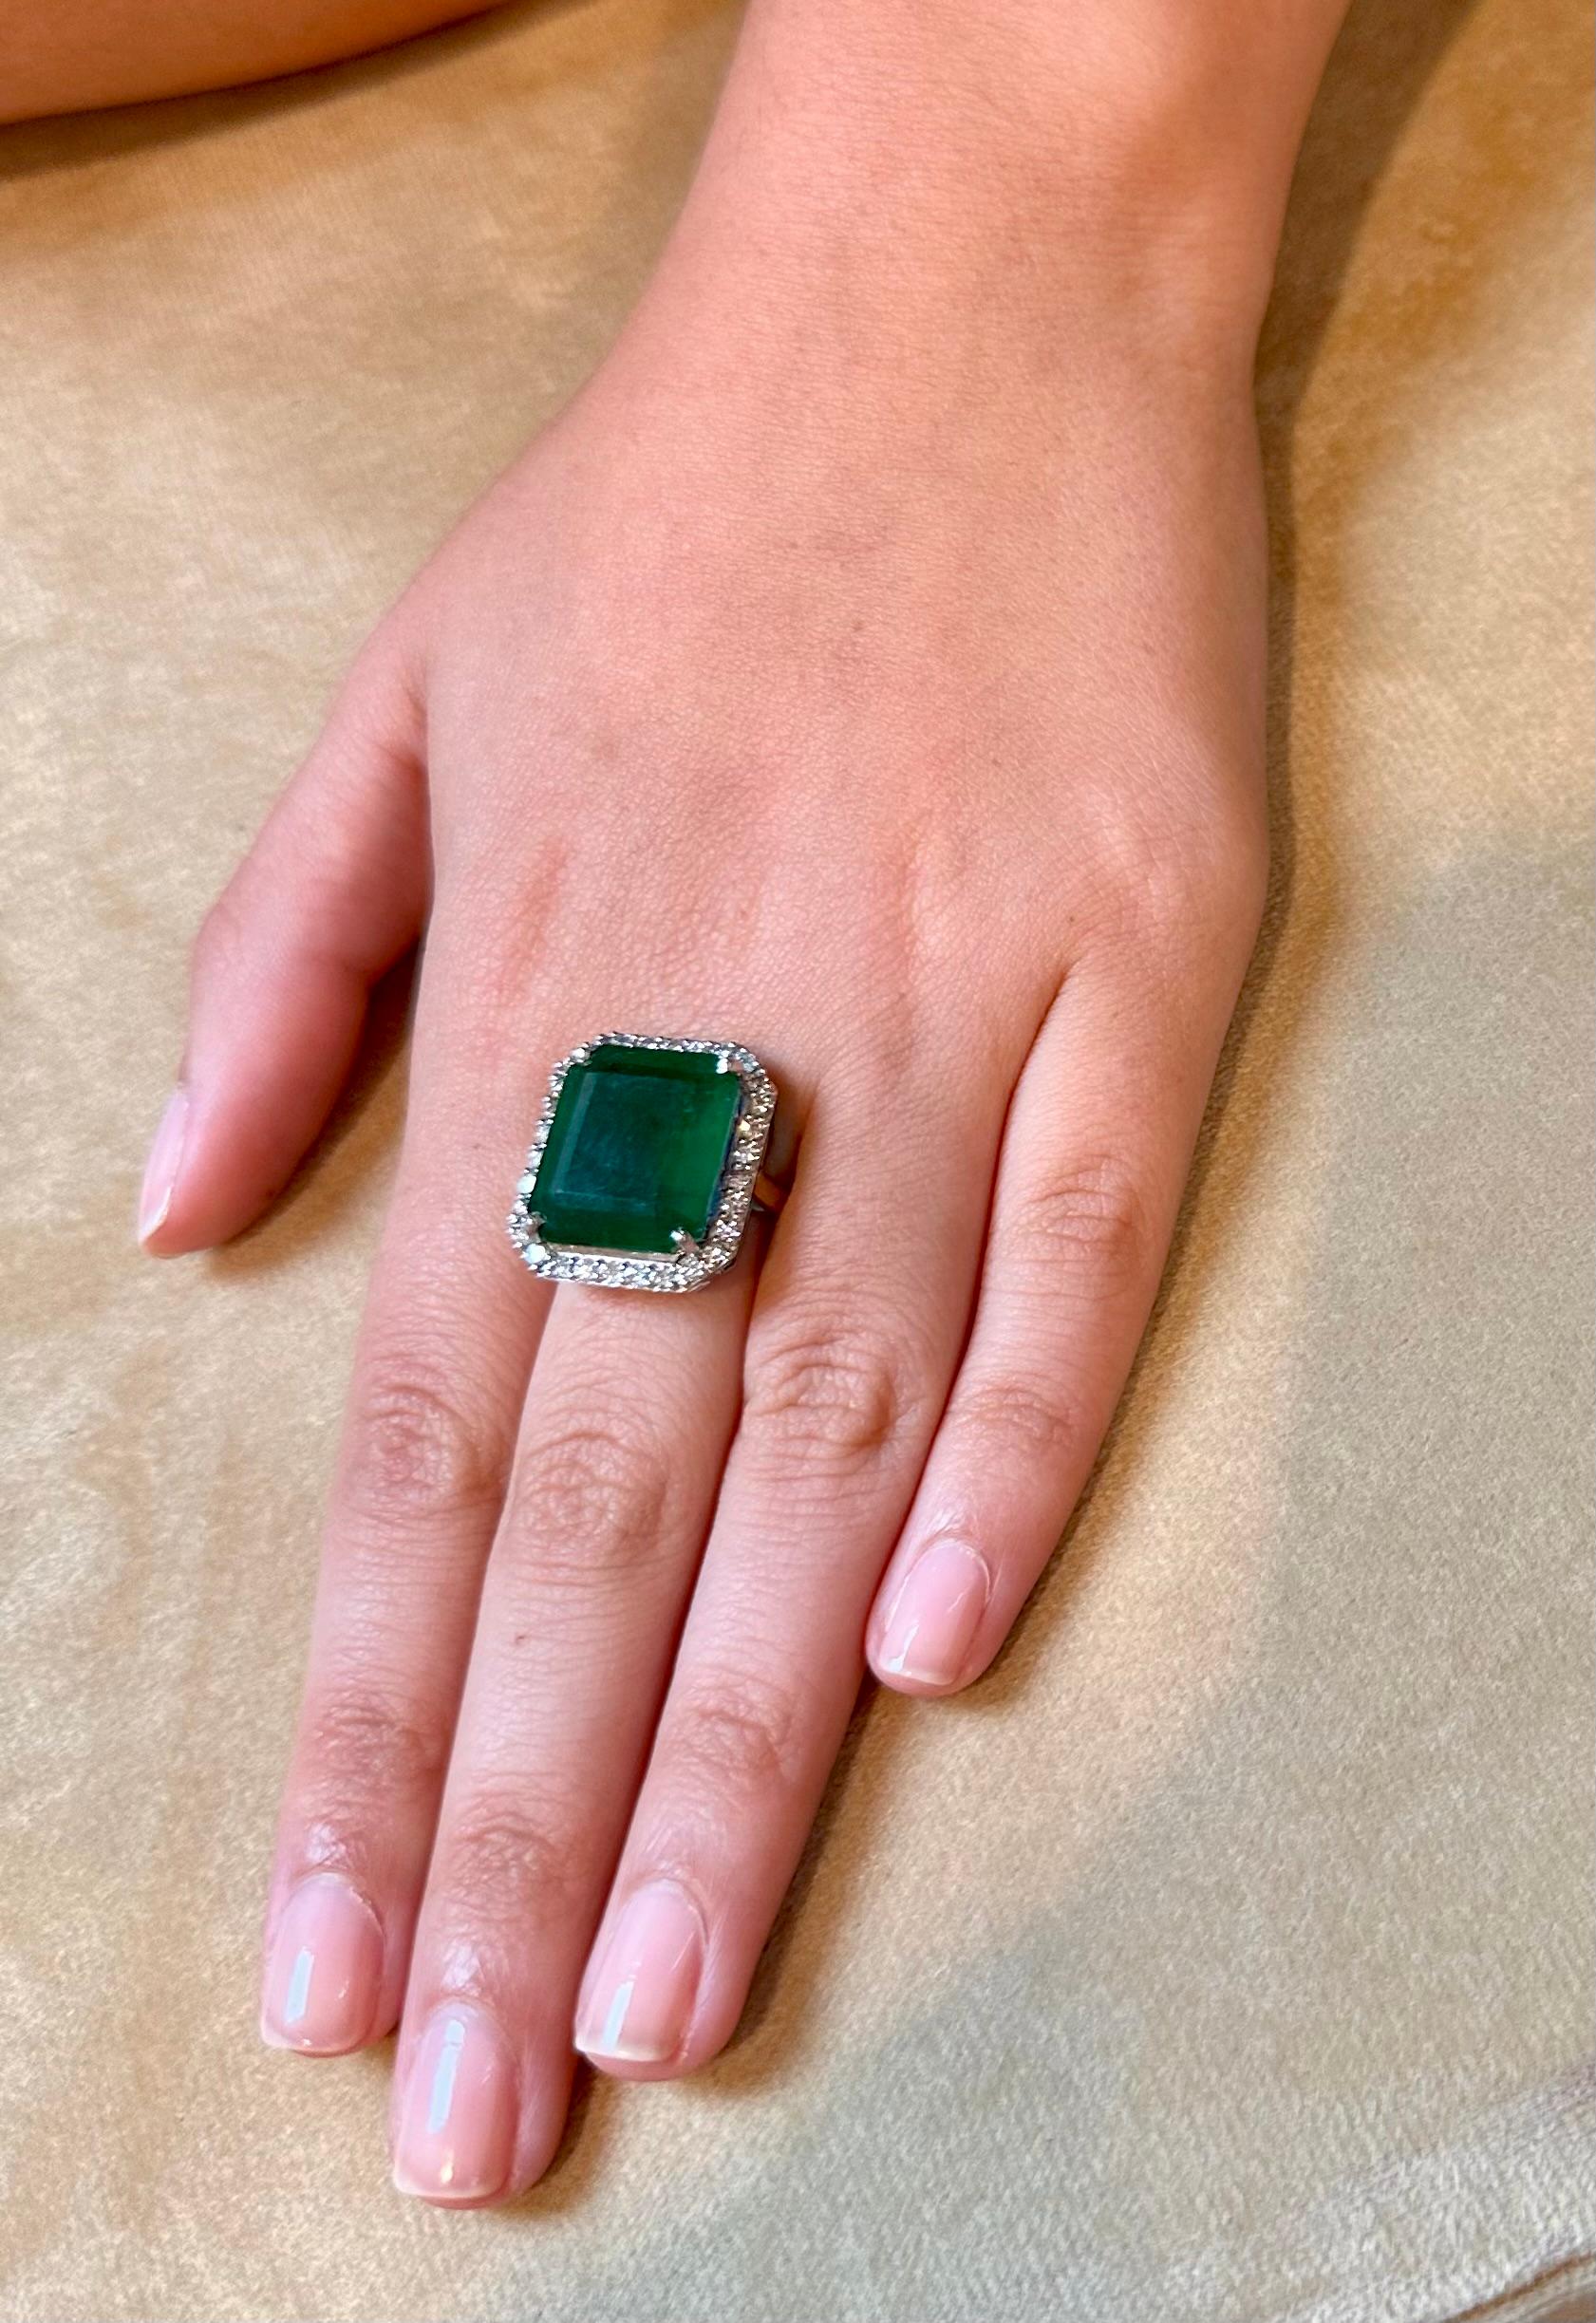 Natural 13 Carat Emerald Cut Zambian Emerald & Diamond Ring in 14kt White Gold For Sale 7